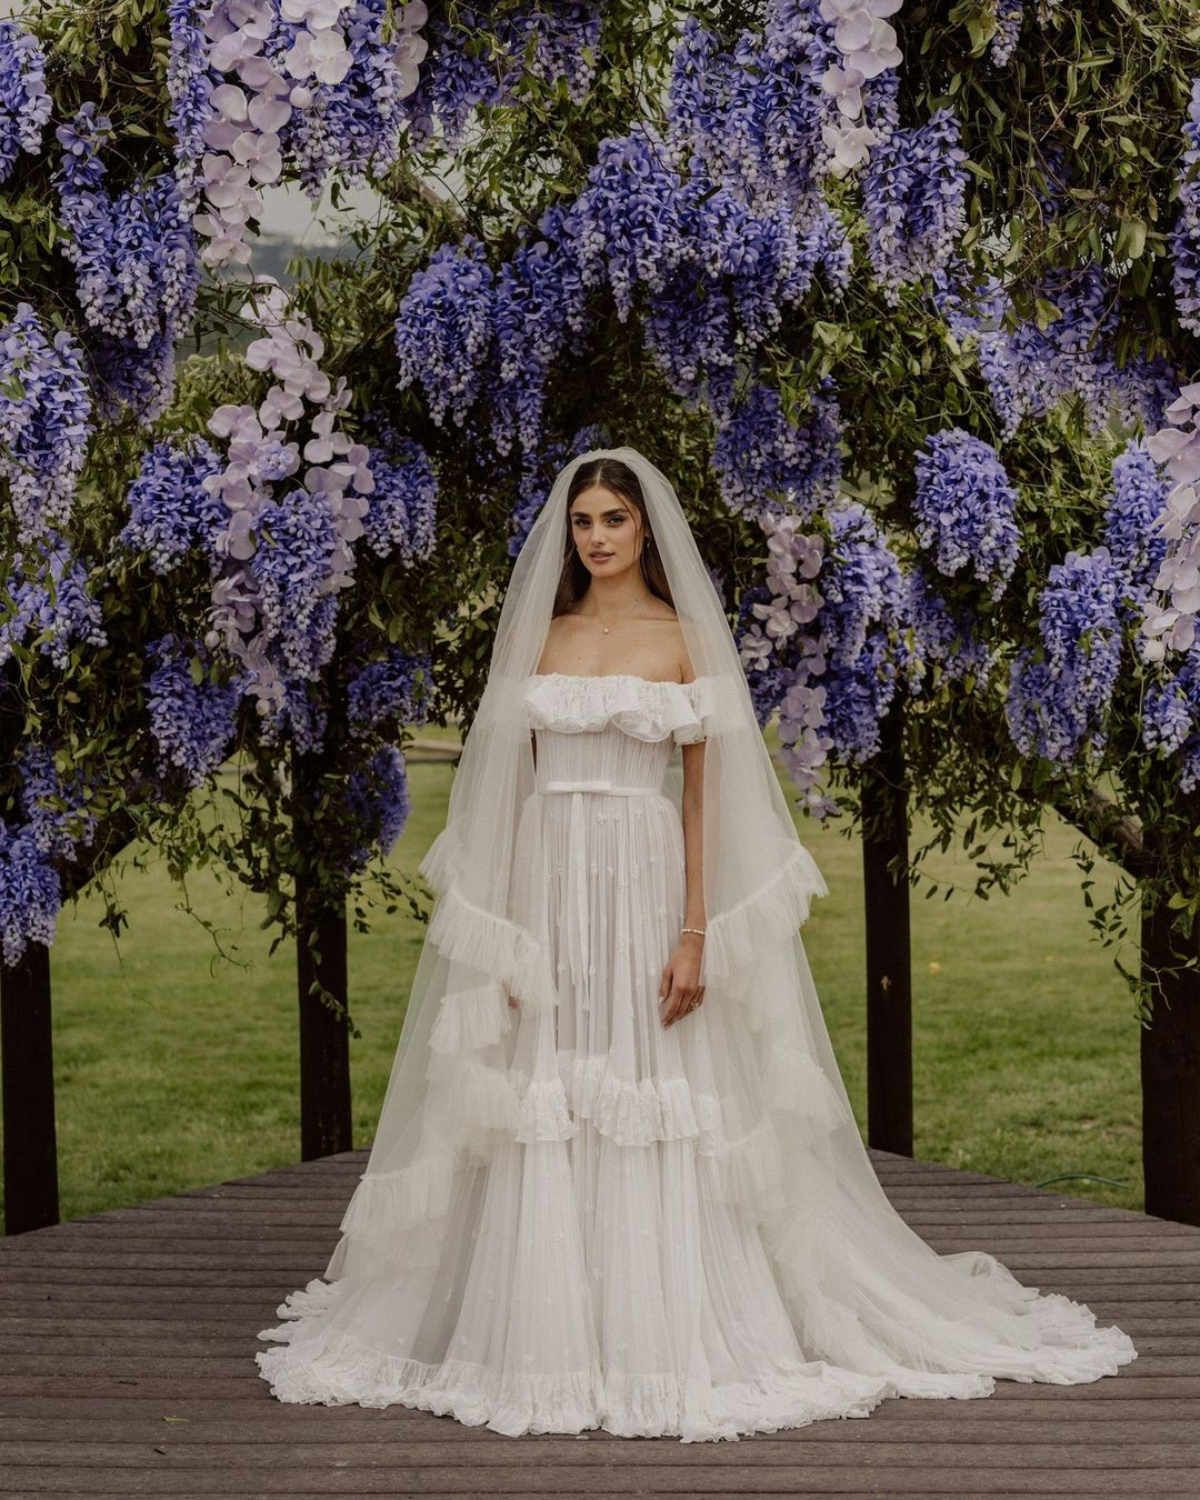 Finding Your Dream Fairytale Wedding Dress: 10 Beautiful Dresses